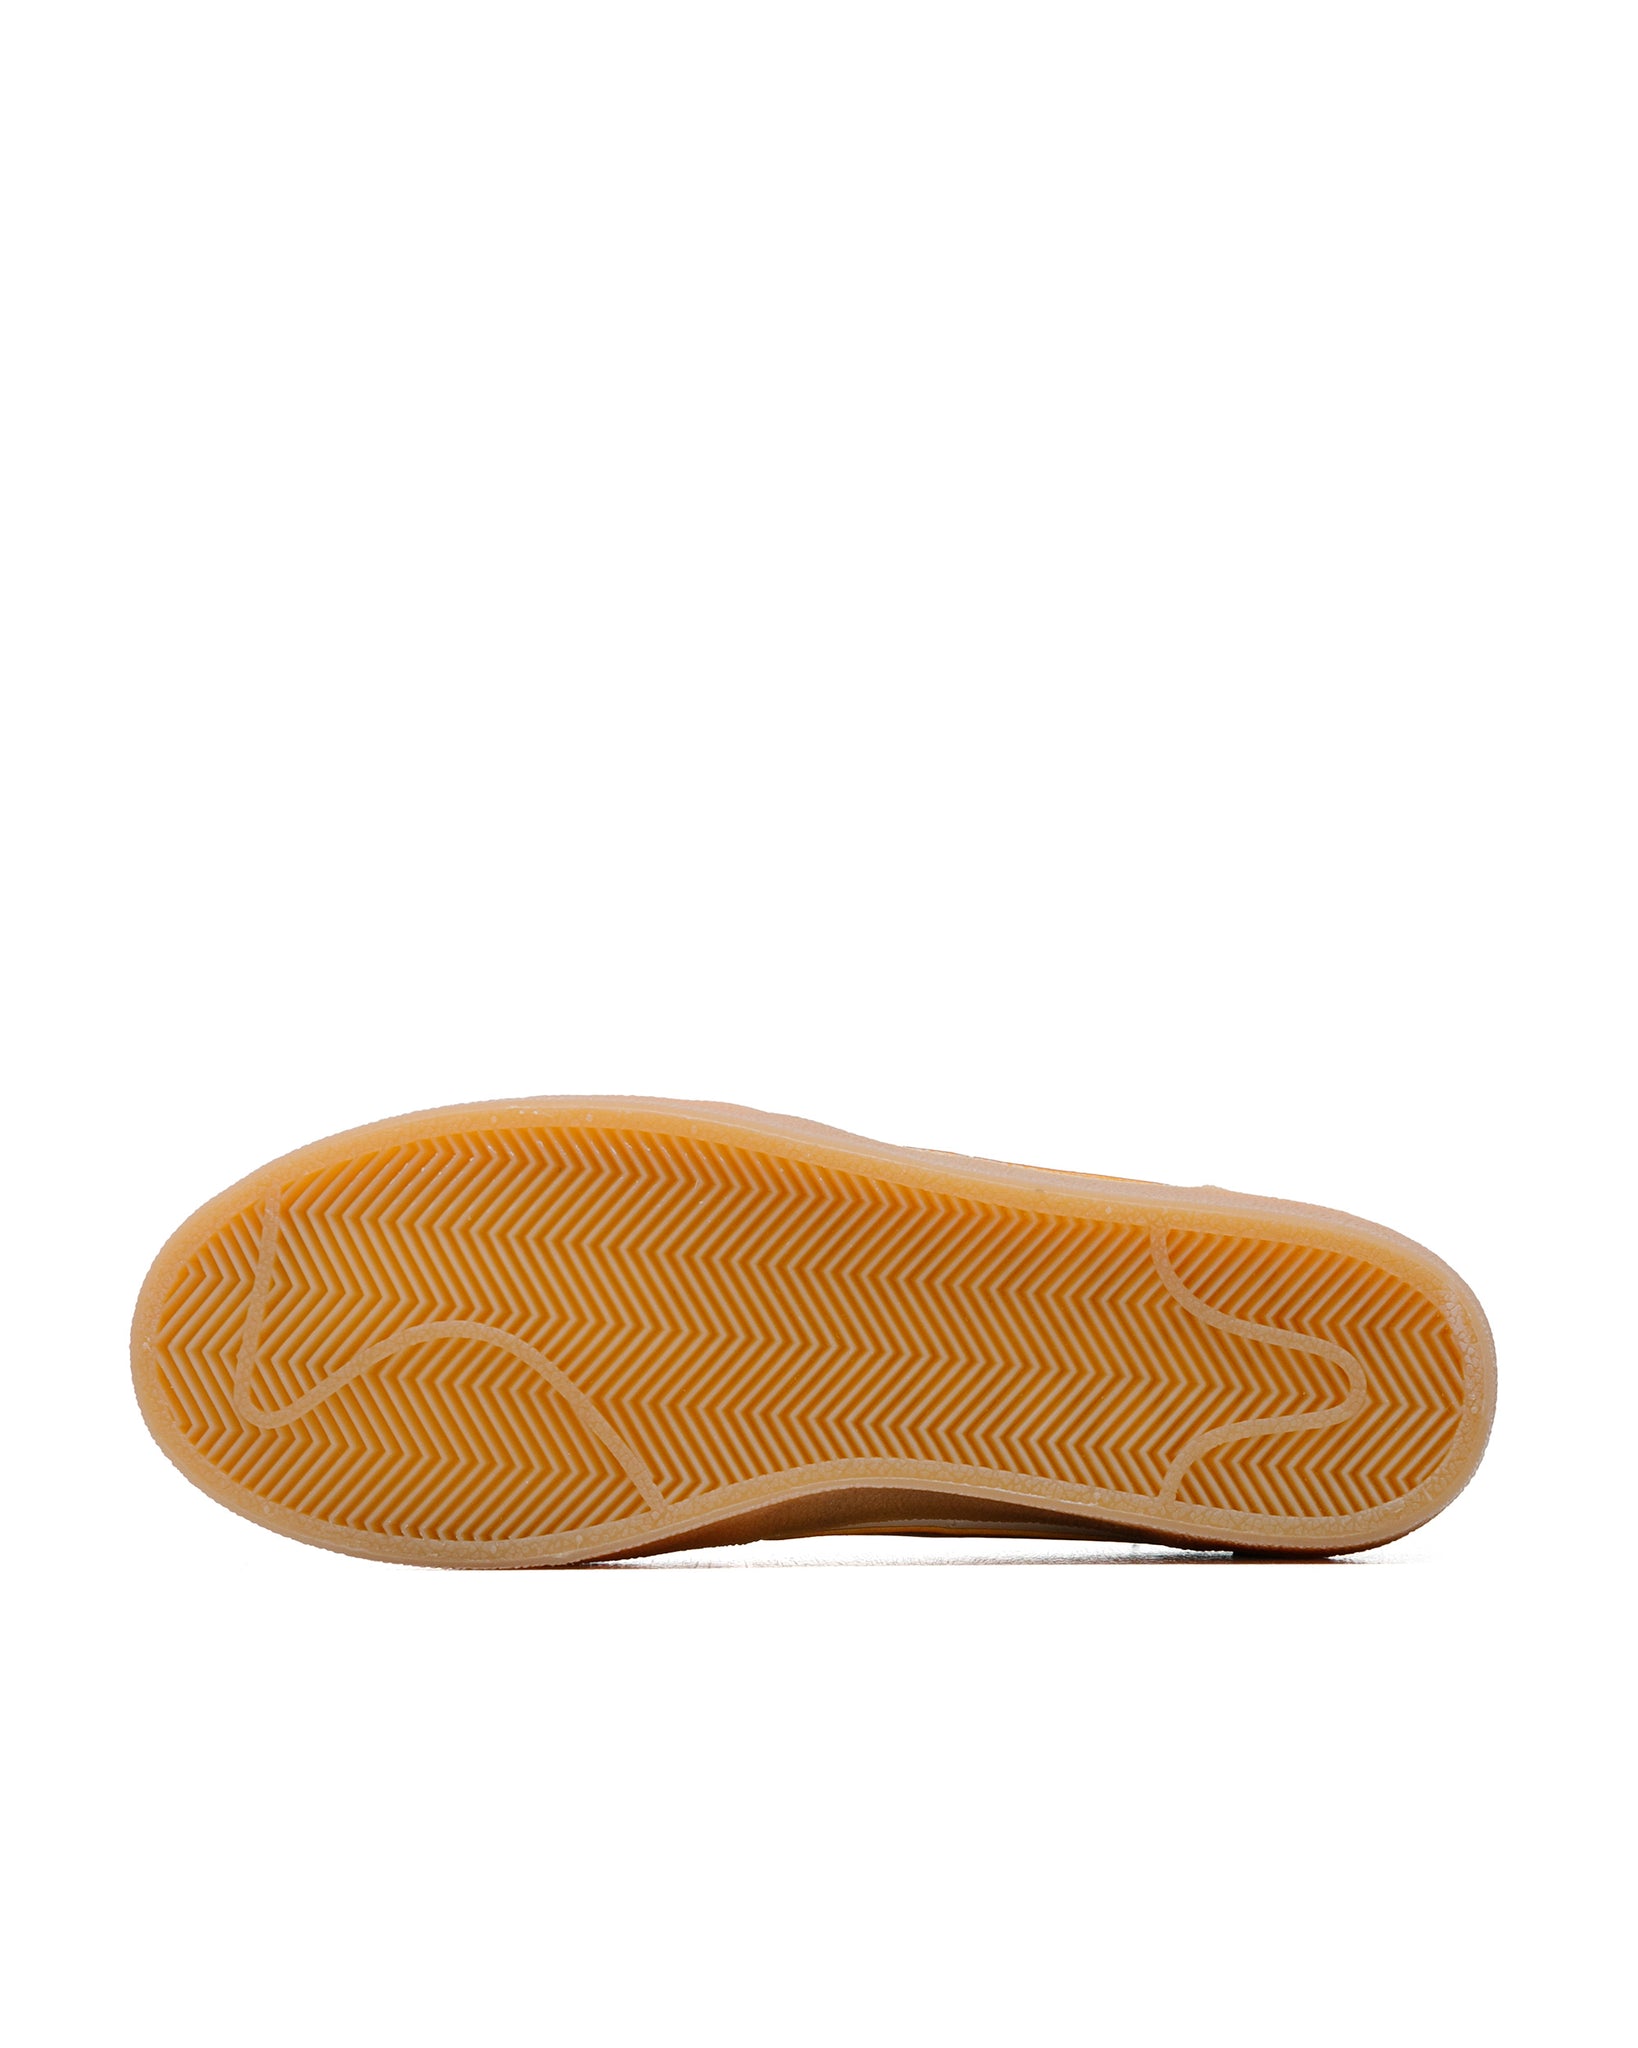 Nike Killshot 2 Leather Sail/Desert Orange sole